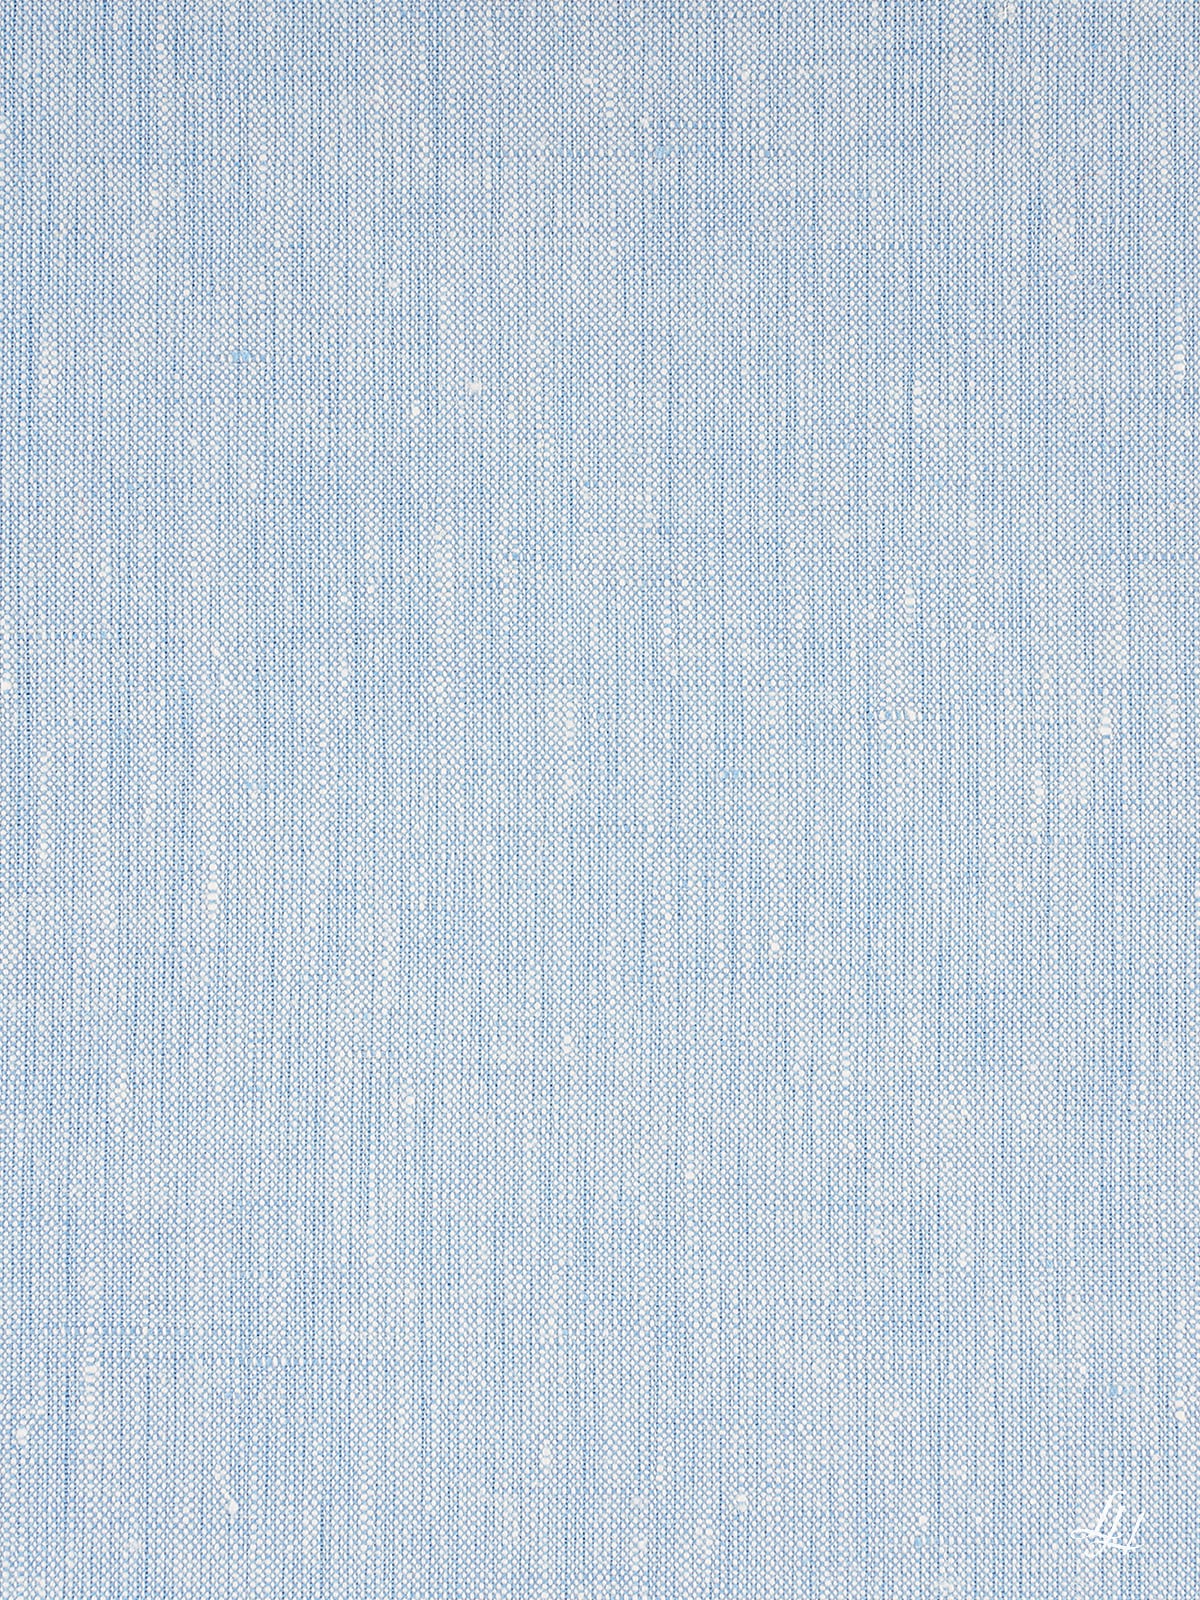 Laken aus Reinleinen-fein in Uni-Farbe Himmelblau